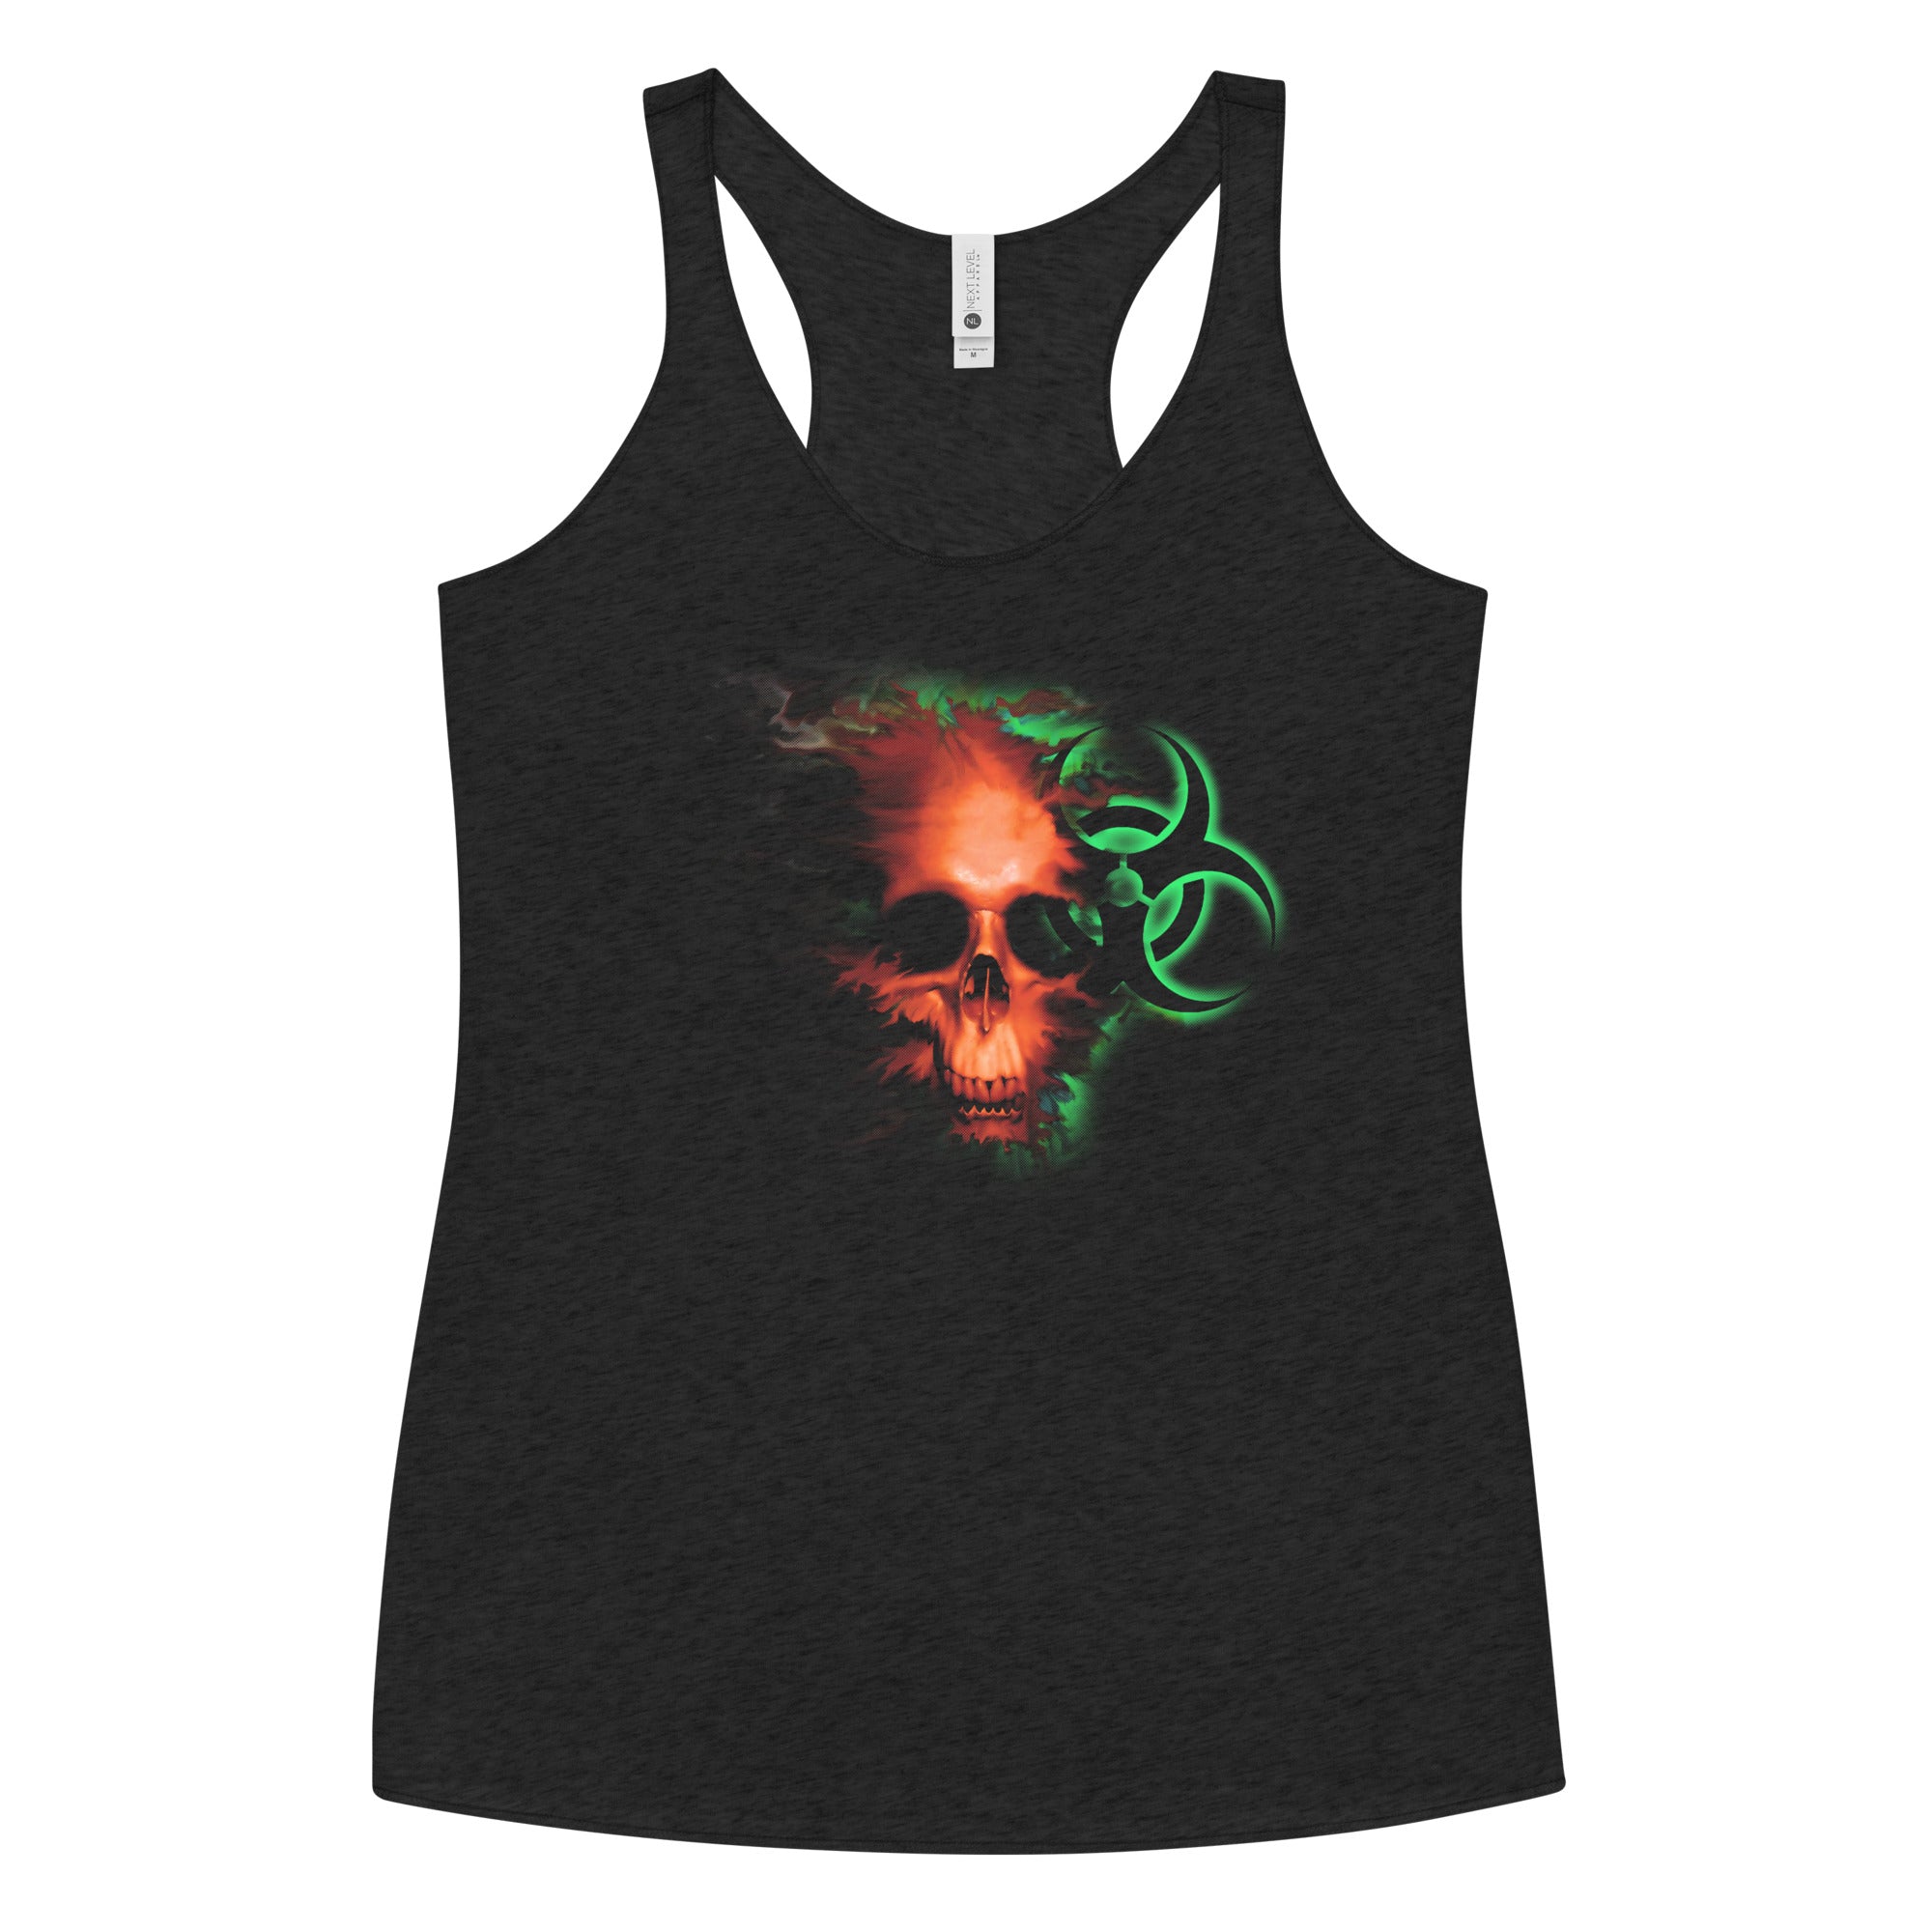 Radioactive Zombie Skull Bio Hazard Women's Racerback Tank Top Shirt - Edge of Life Designs